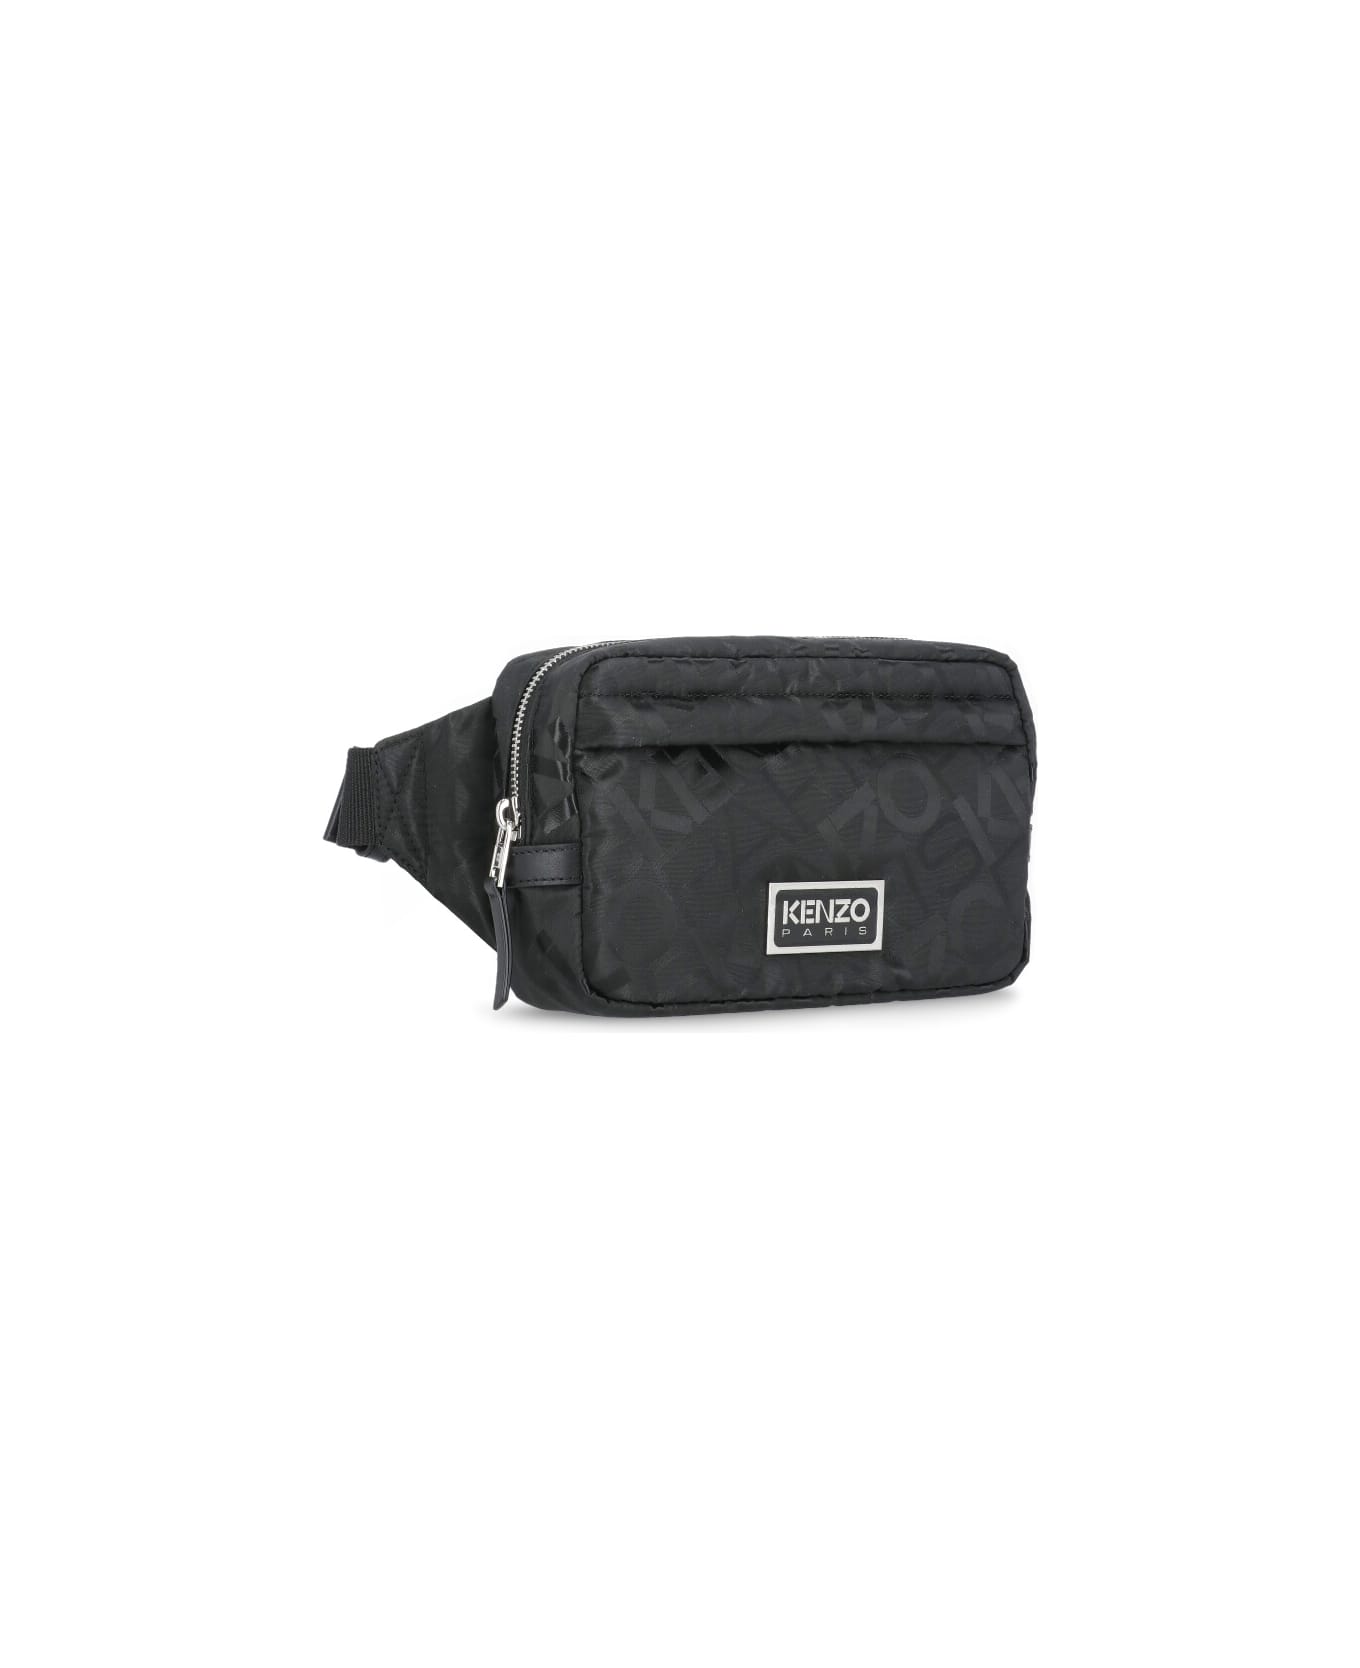 Kenzo Belt Bag - Black